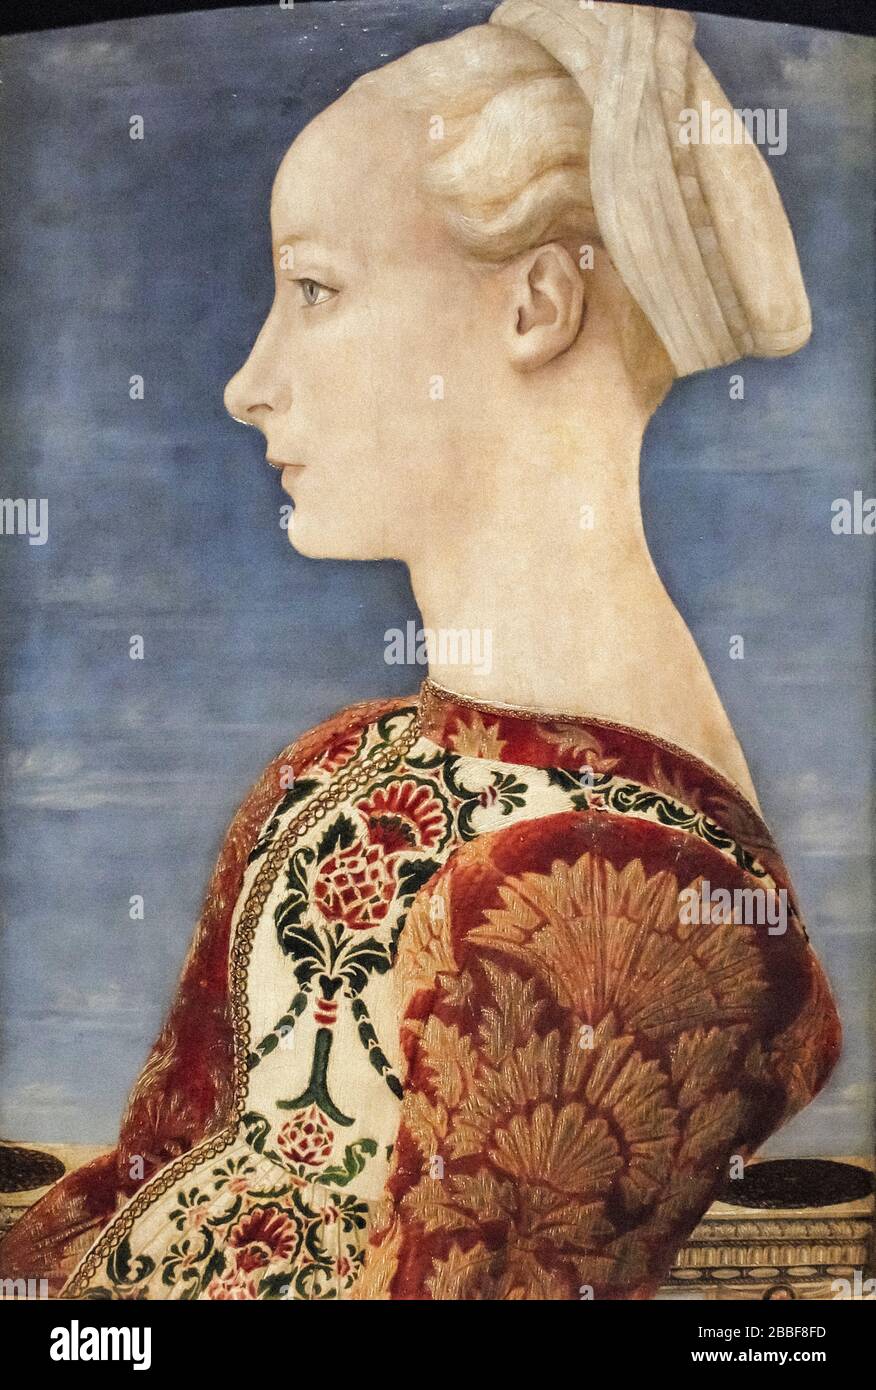 Piero del Pollaiolo, Portrait of a young woman, 1465 - Berlin, Gemäldegalerie, Staatliche Museen zu Berlin, Preußischer Kulturbesitz Stock Photo